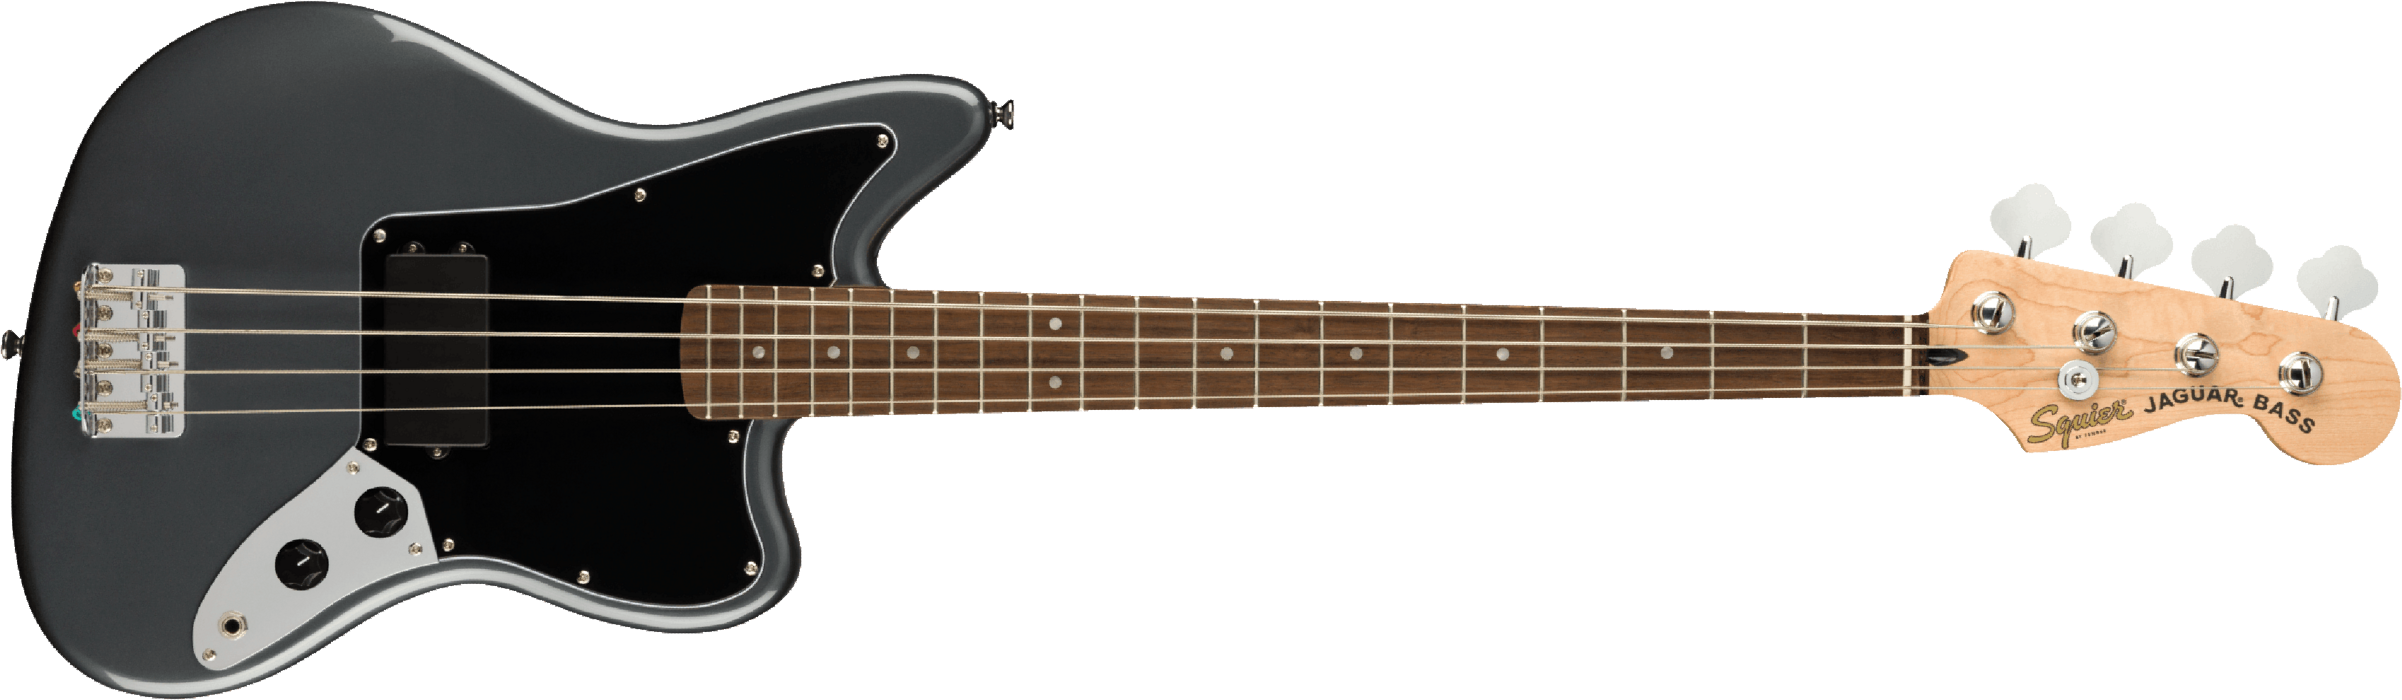 Squier Jaguar Bass Affinity 2021 Lau - Charcoal Frost Metallic - Solid body elektrische bas - Main picture